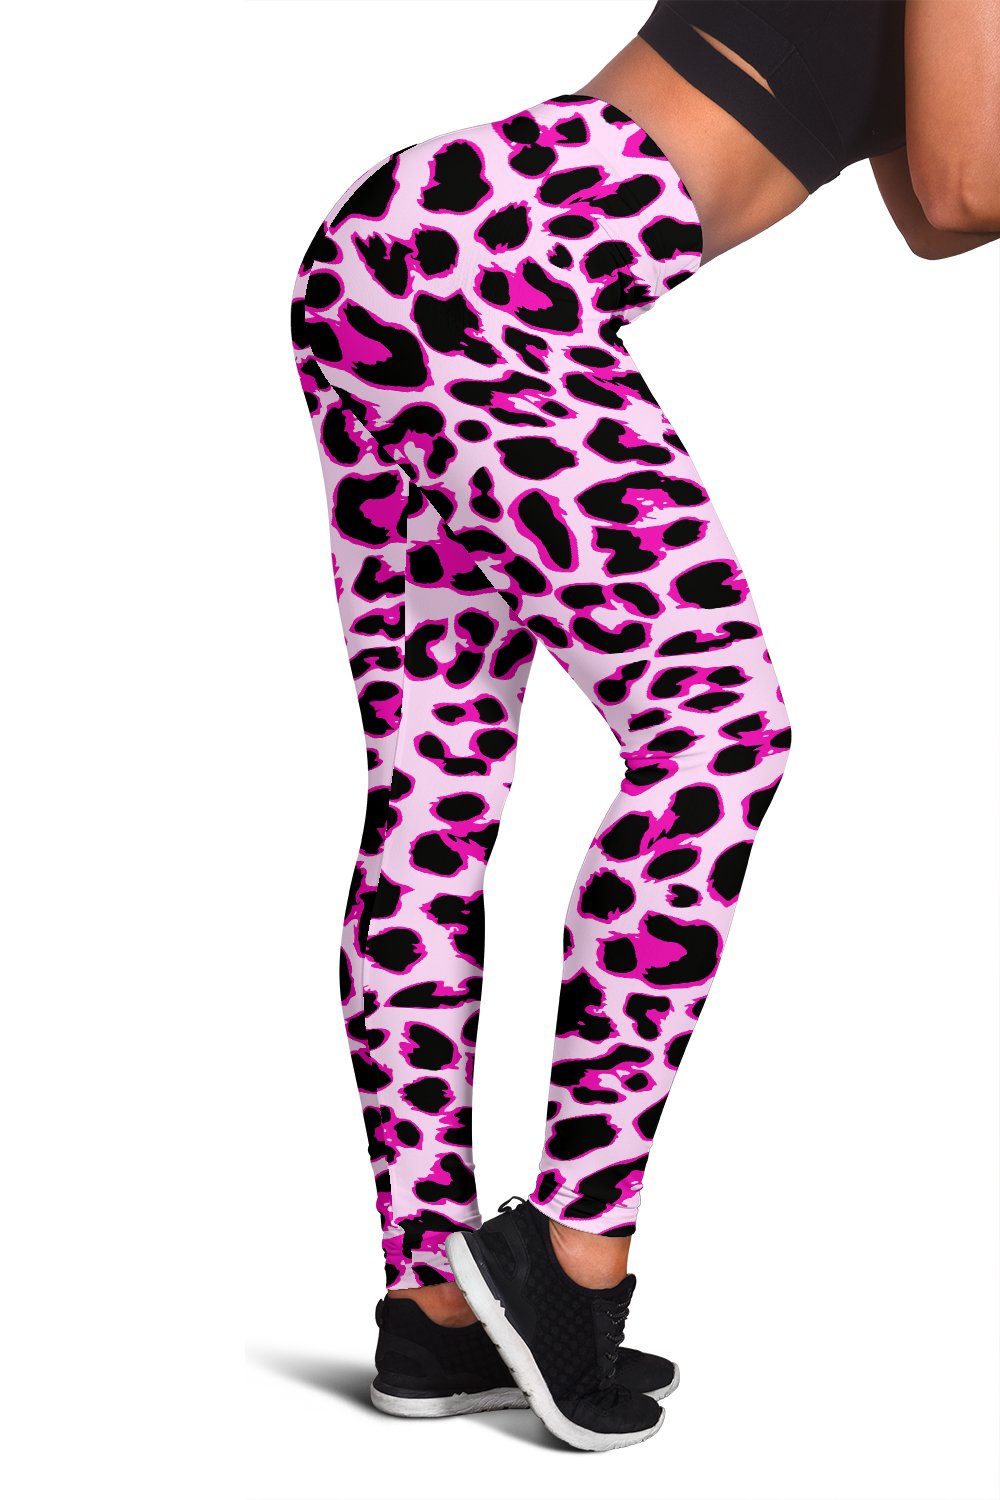 Meaningwave Neon Leopard Women's Tights